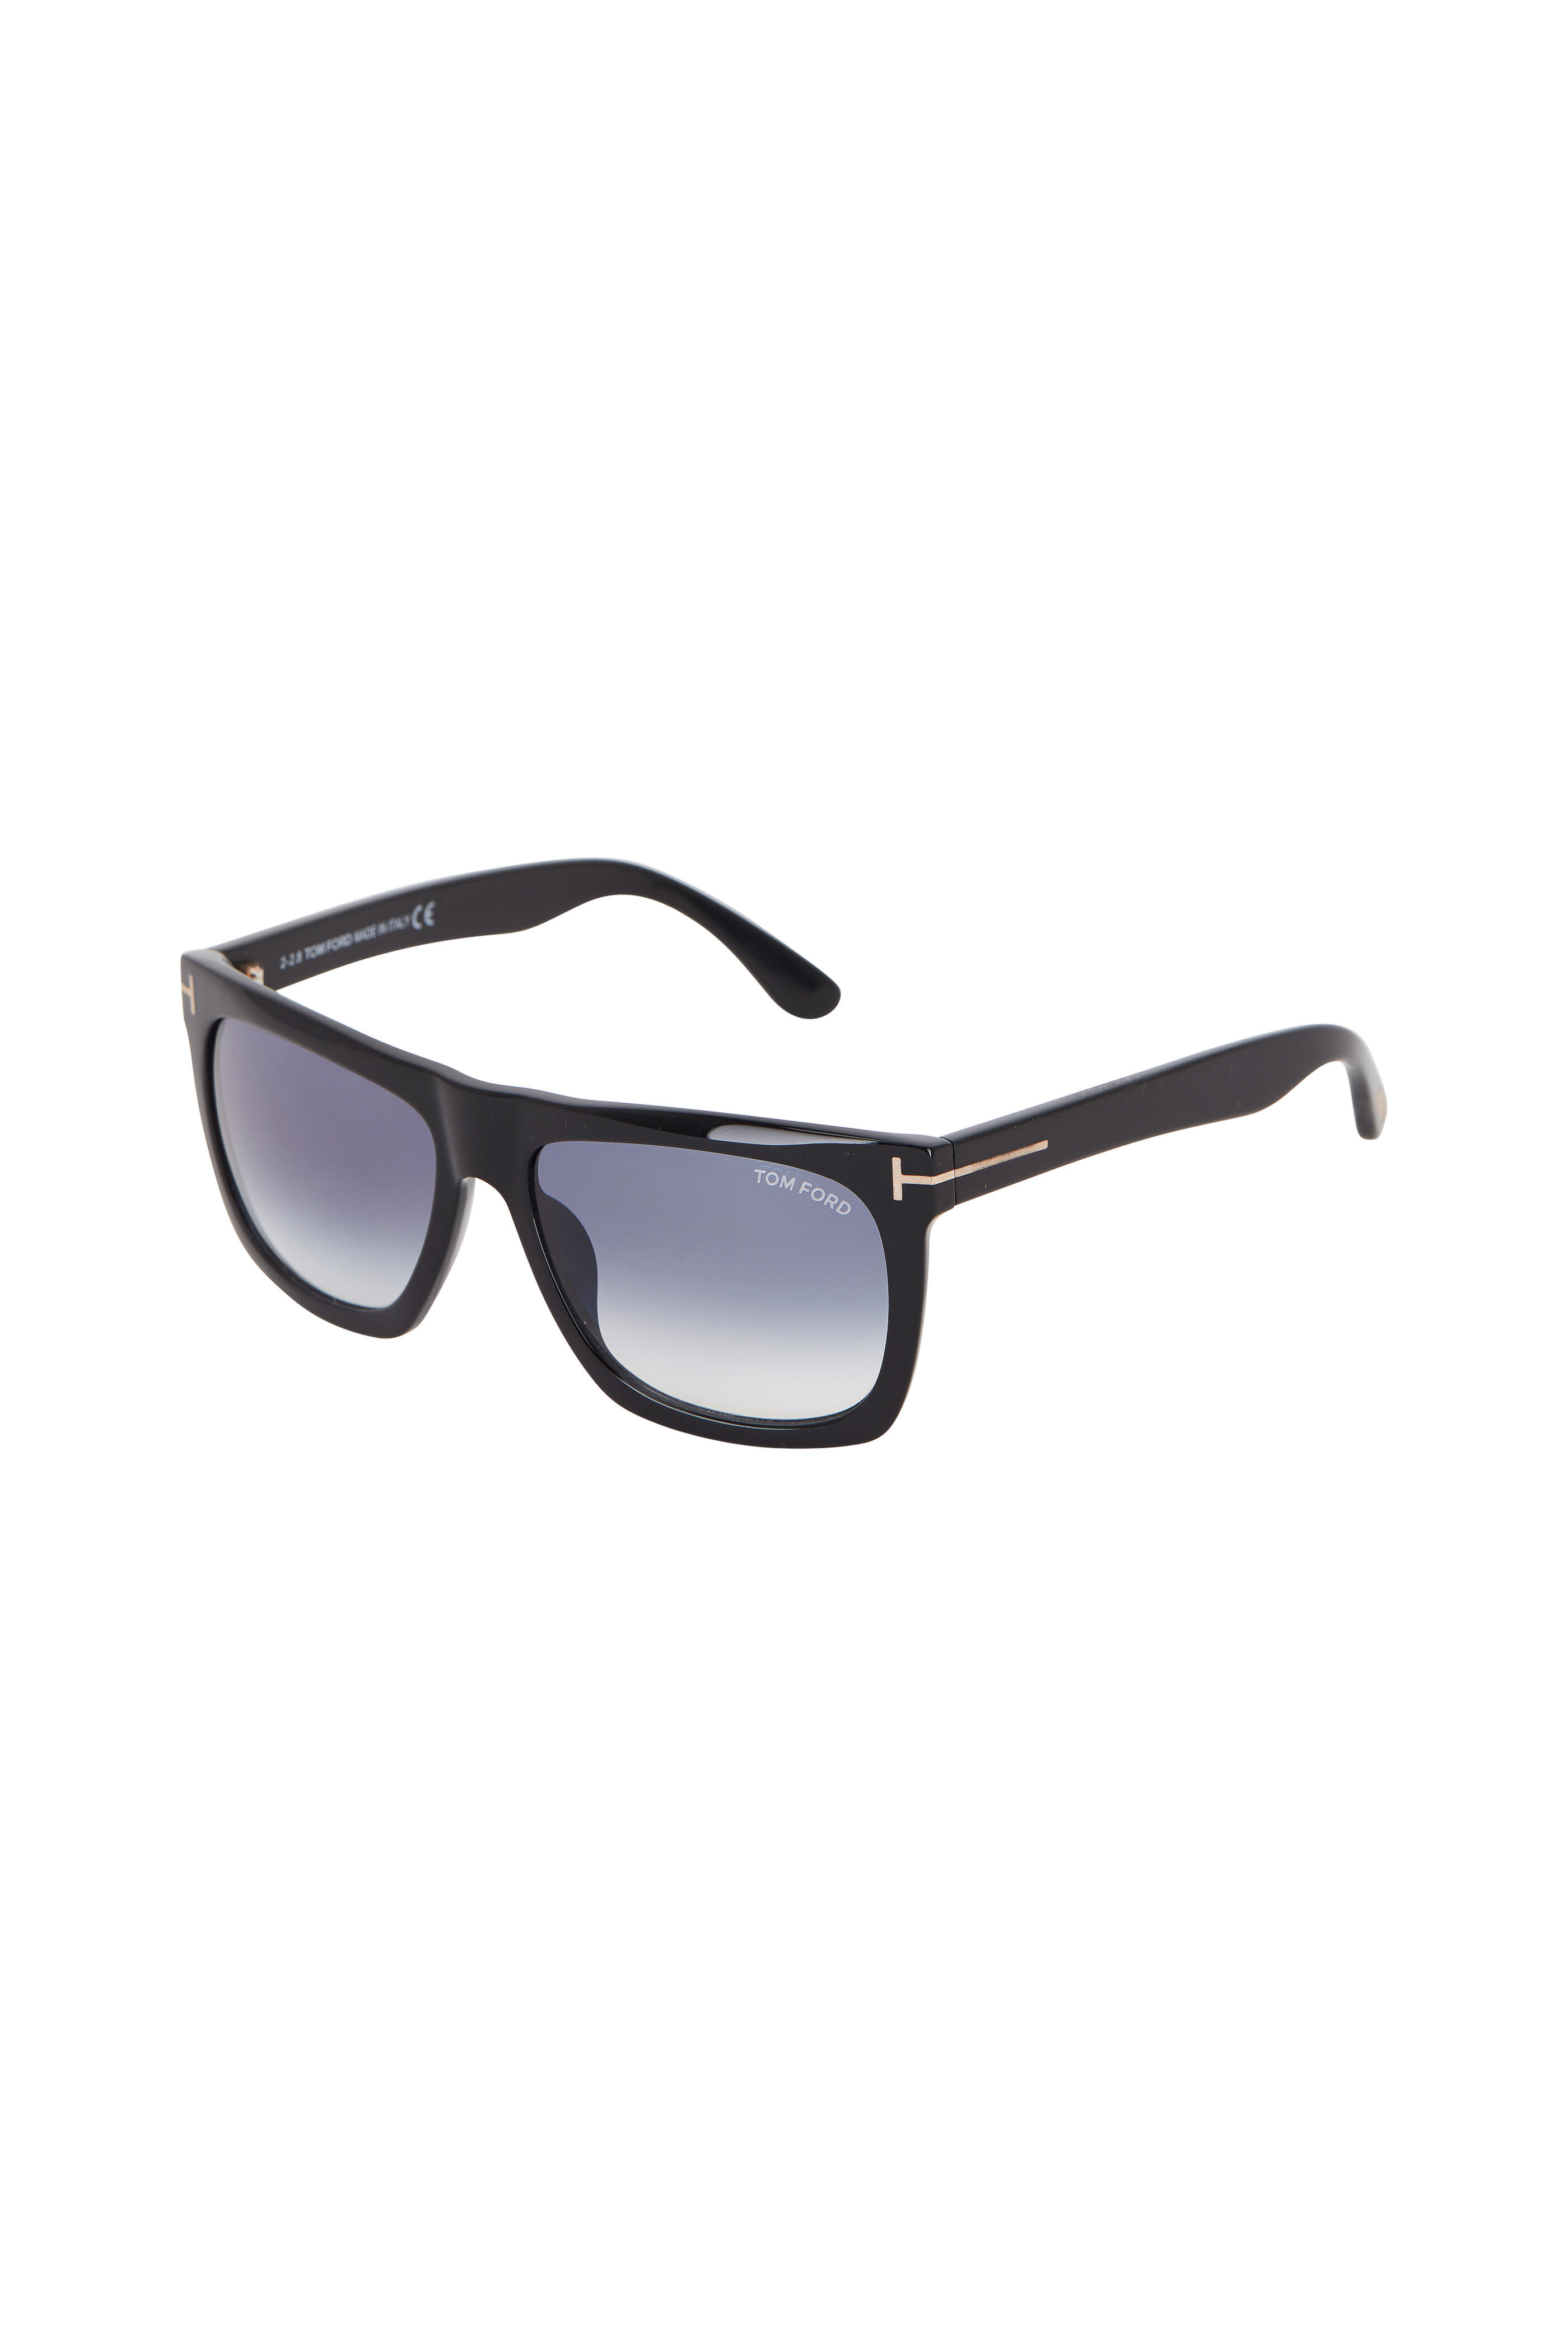 Tom Ford Eyewear - Morgan Shiny Black Sunglasses